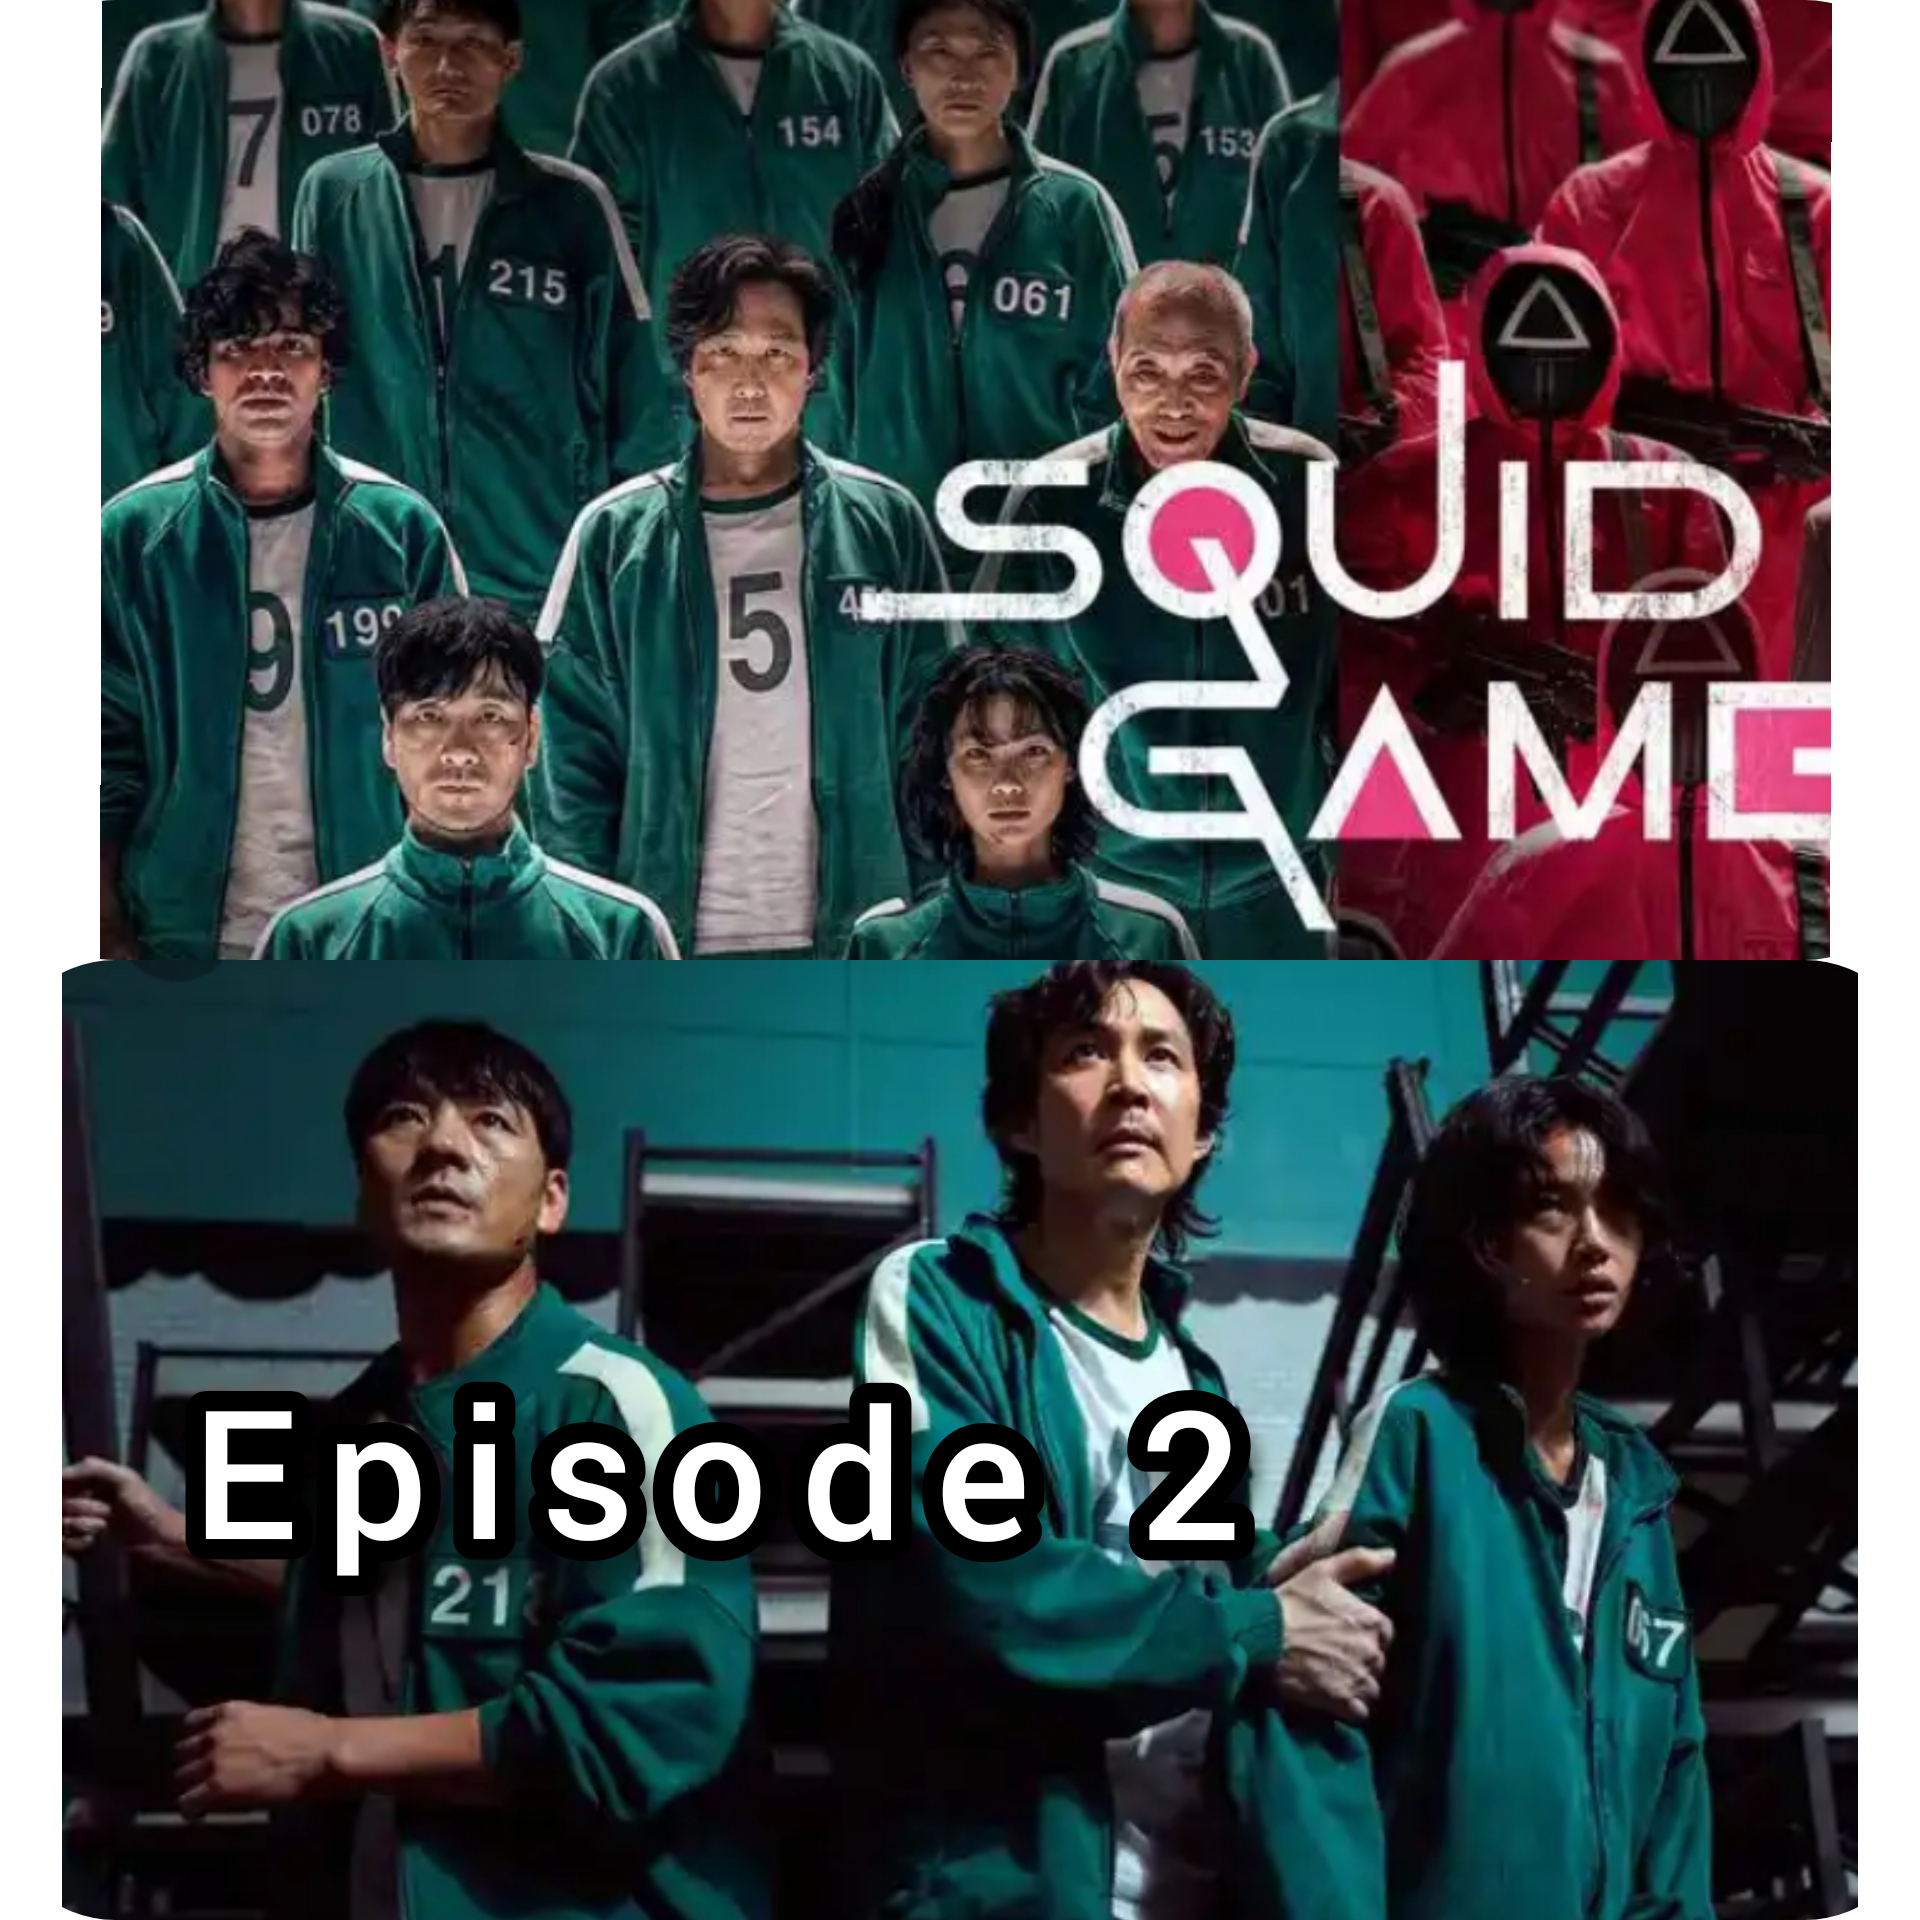 Squid game ep 2